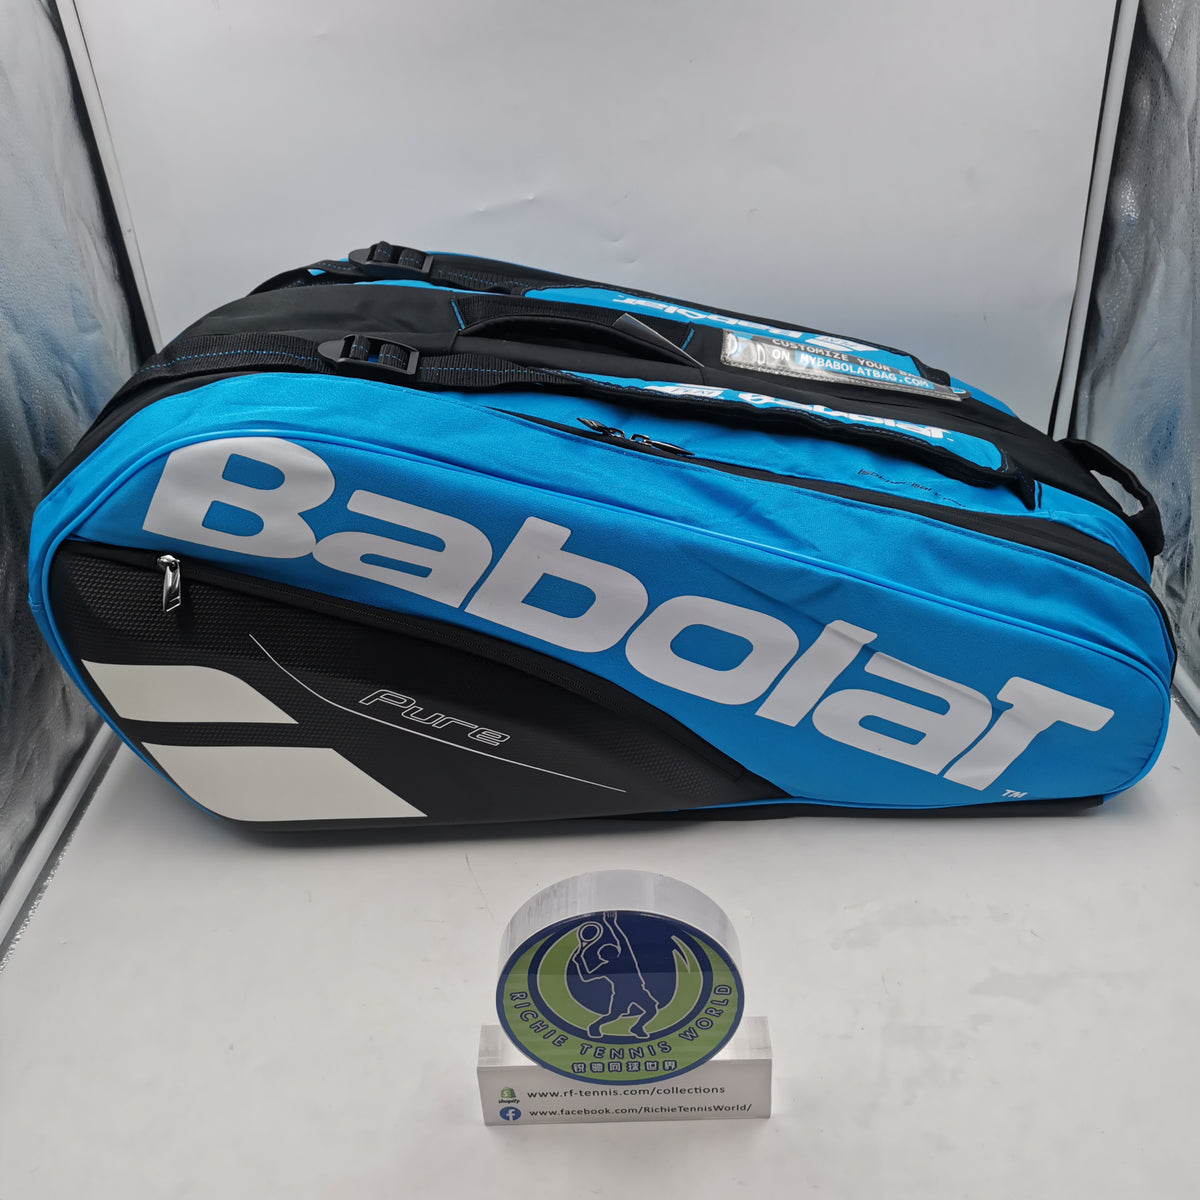 Babolat Pure Drive Duffel Tennis Bag 758005-136 - The Tennis Shop